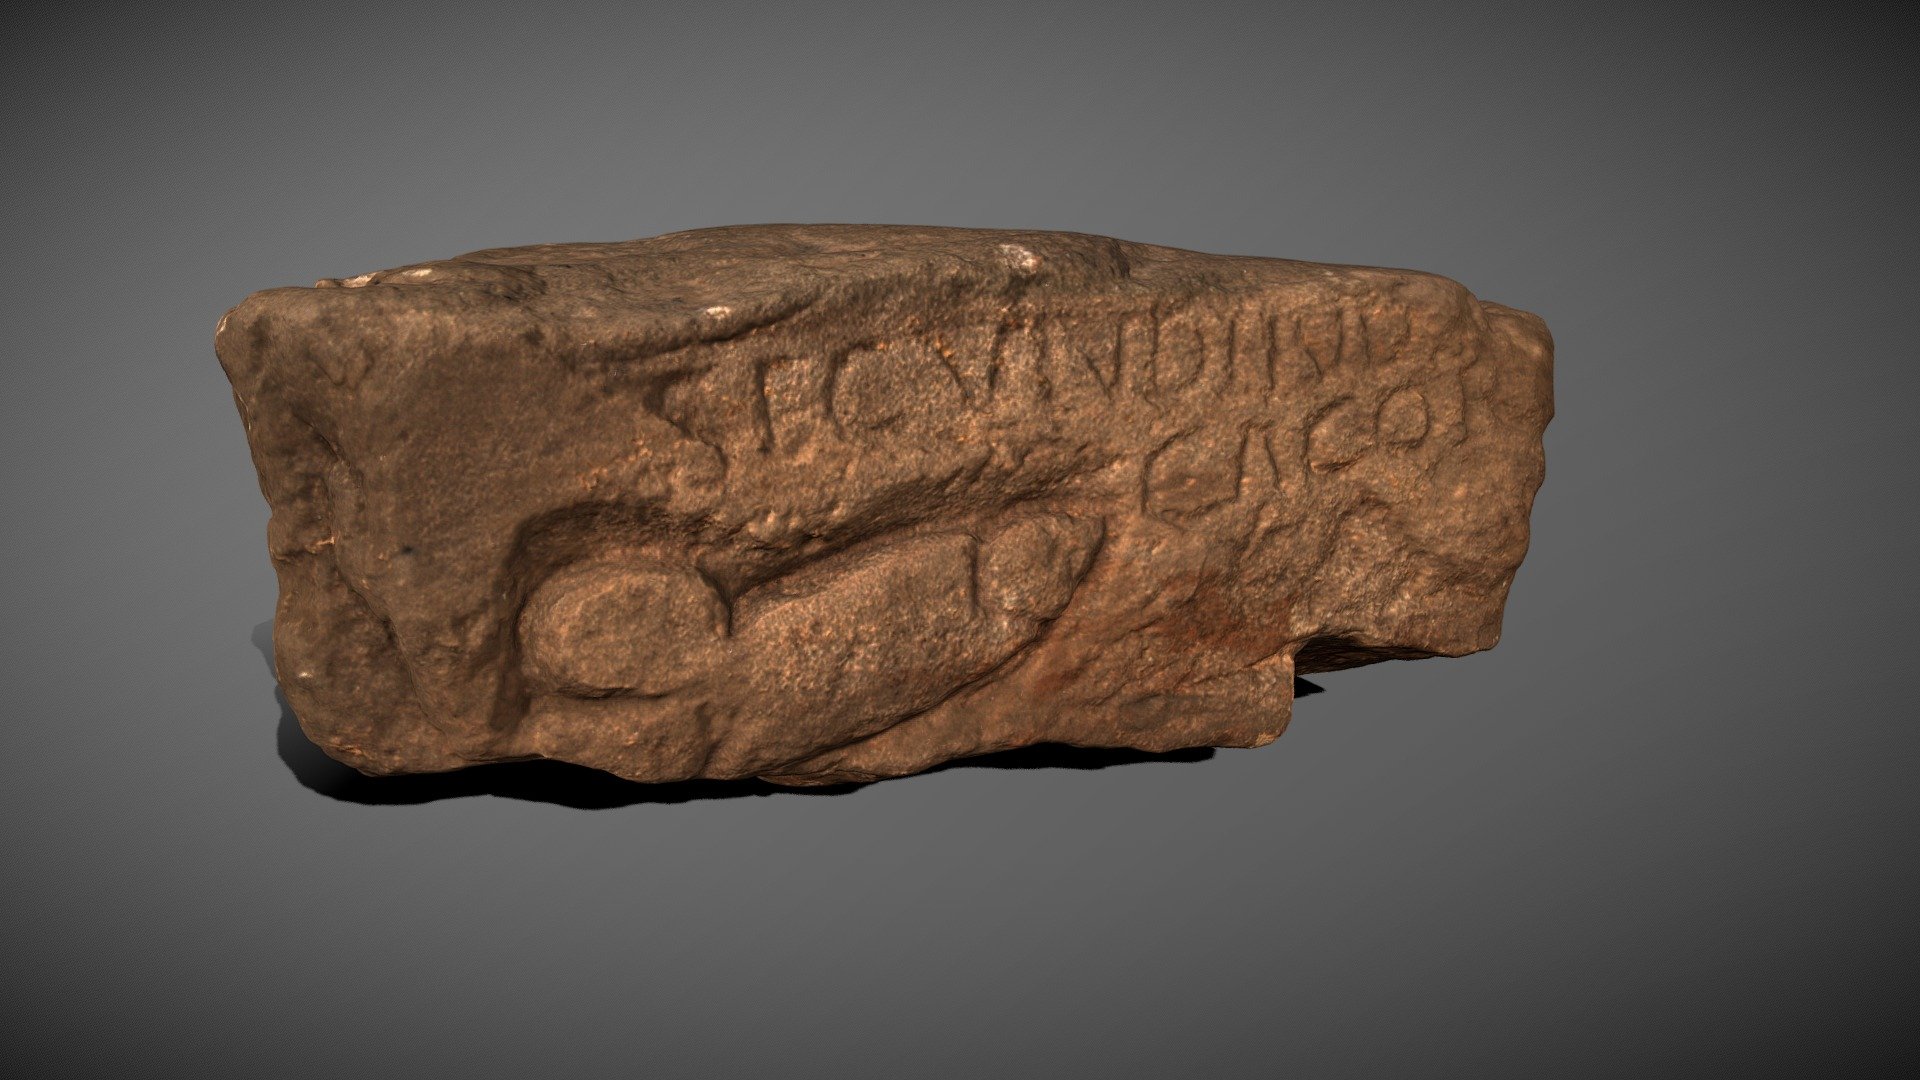 A stone from Roman Vindolanda, graffitied with &ldquo;Secundinus Cacor